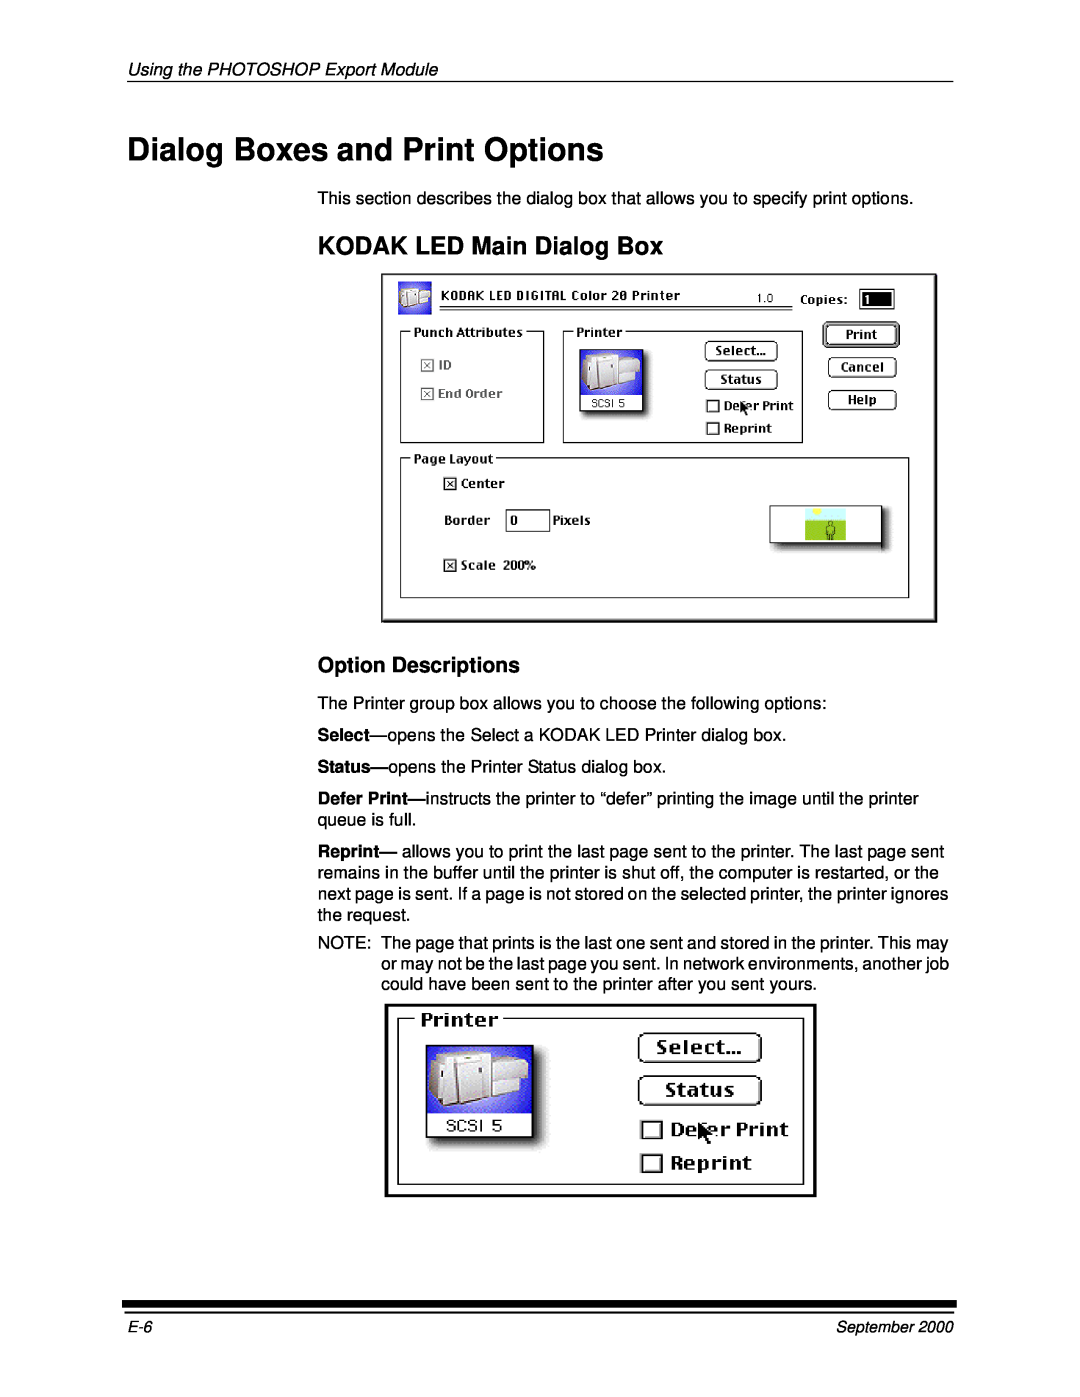 Kodak 20P manual KODAK LED Main Dialog Box, Dialog Boxes and Print Options, Option Descriptions 